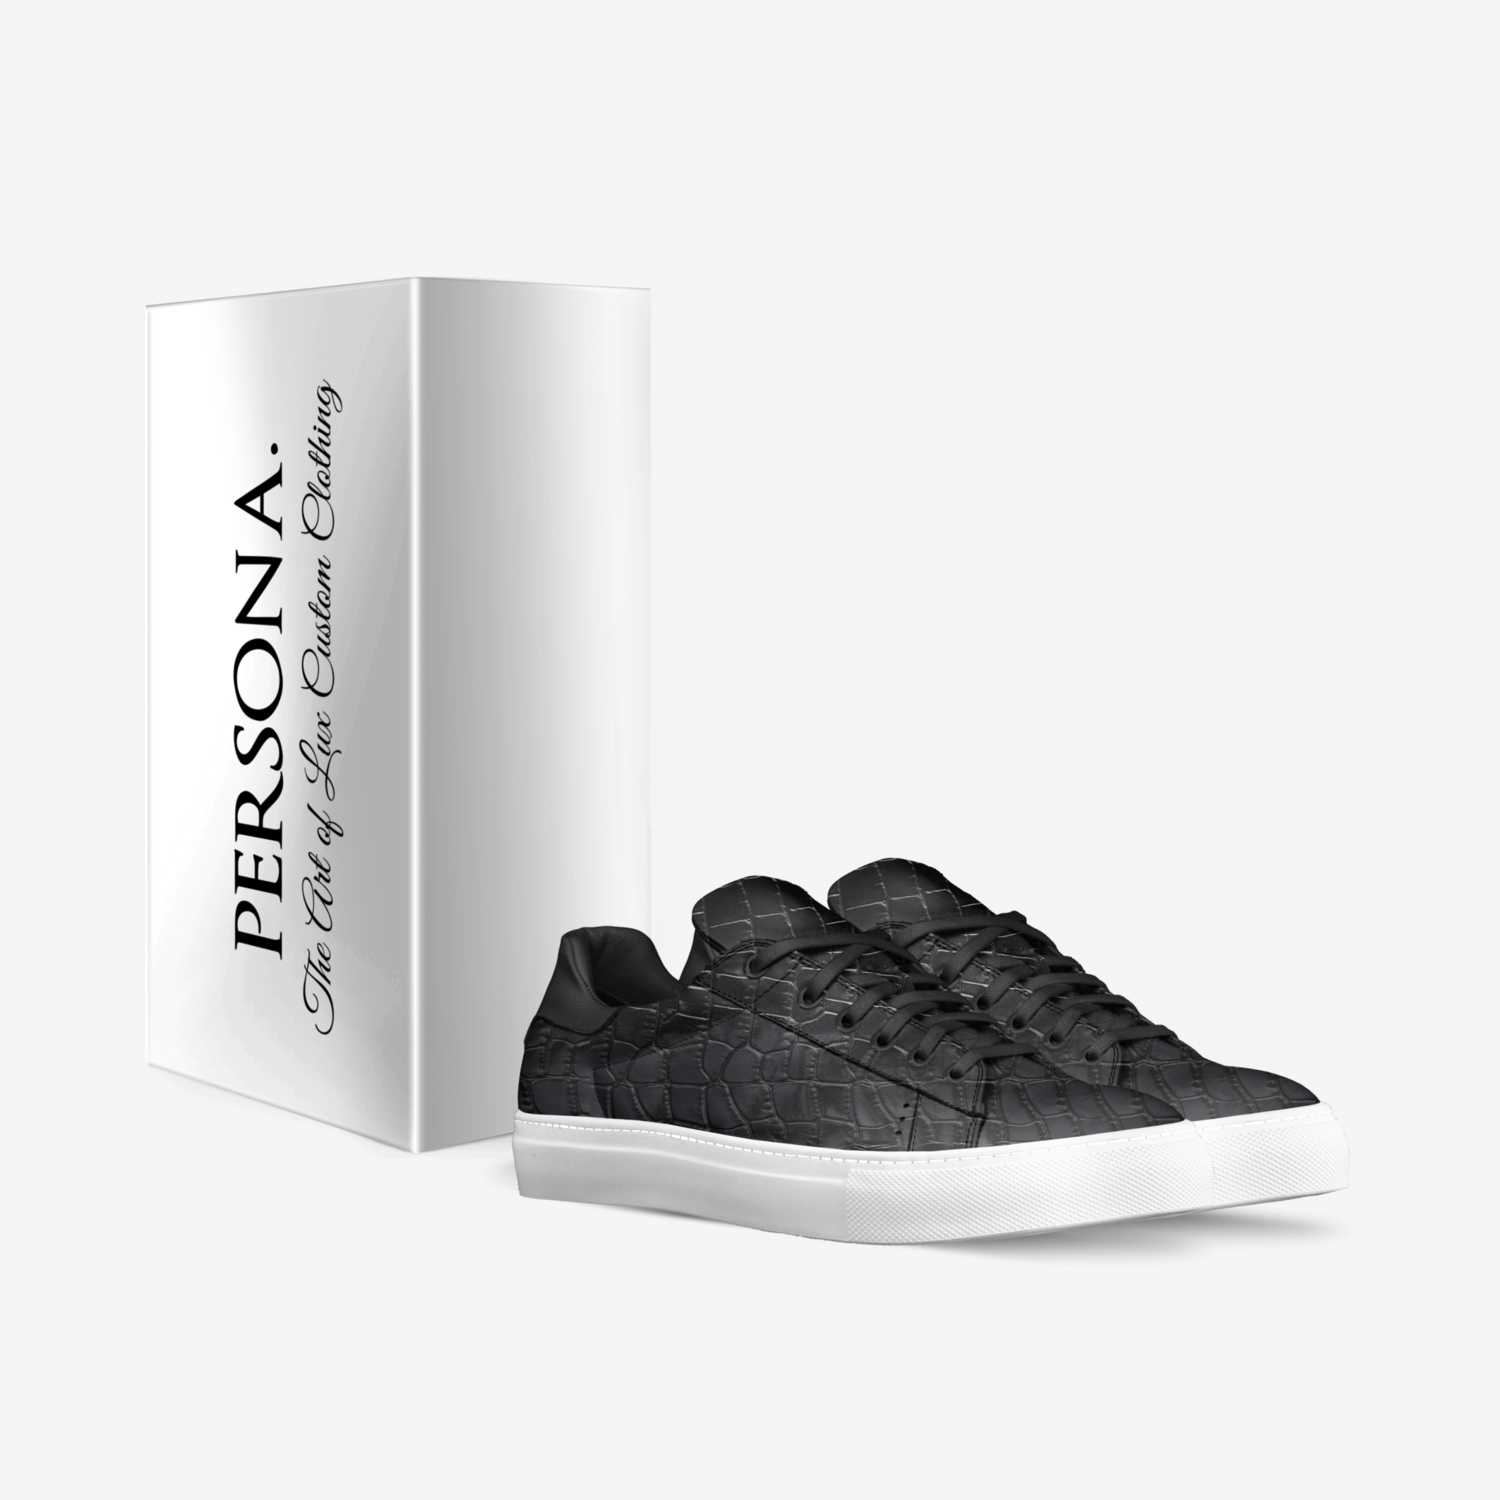 MEMPHIAN Black custom made in Italy shoes by Zuri Greer | Box view